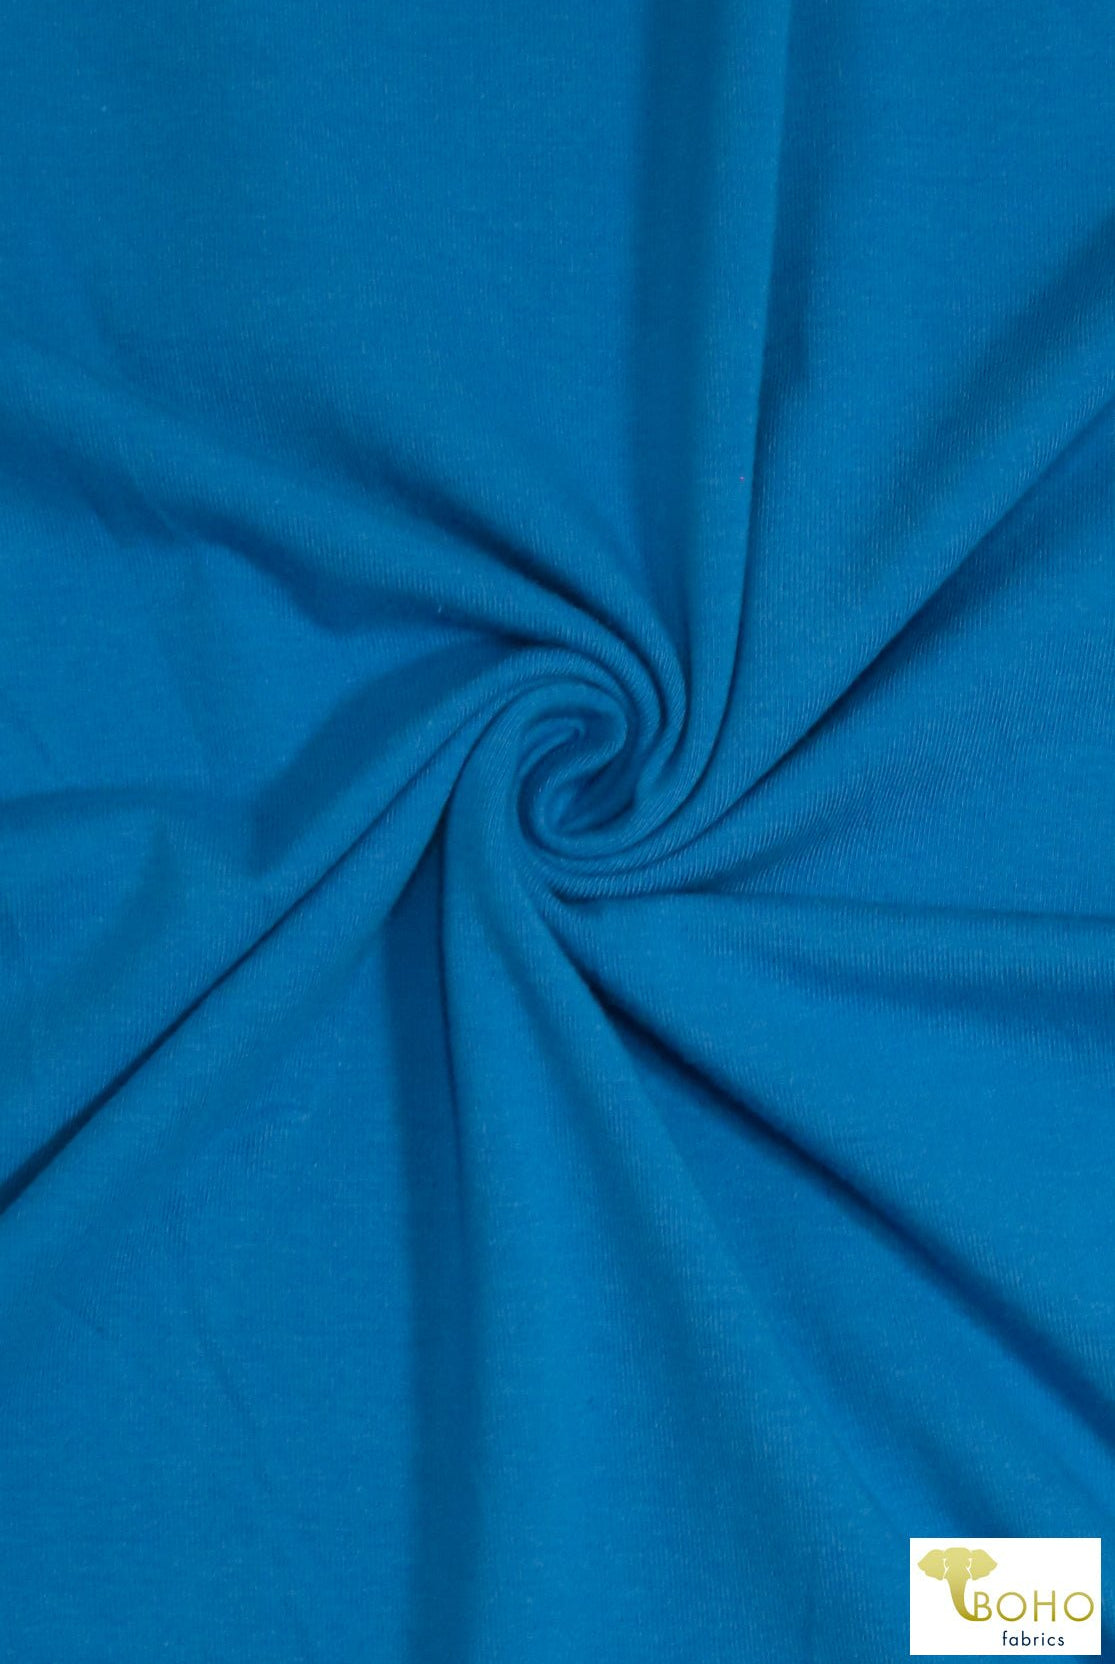 French Blue, Cotton Spandex Knit, 10 oz. - Boho Fabrics